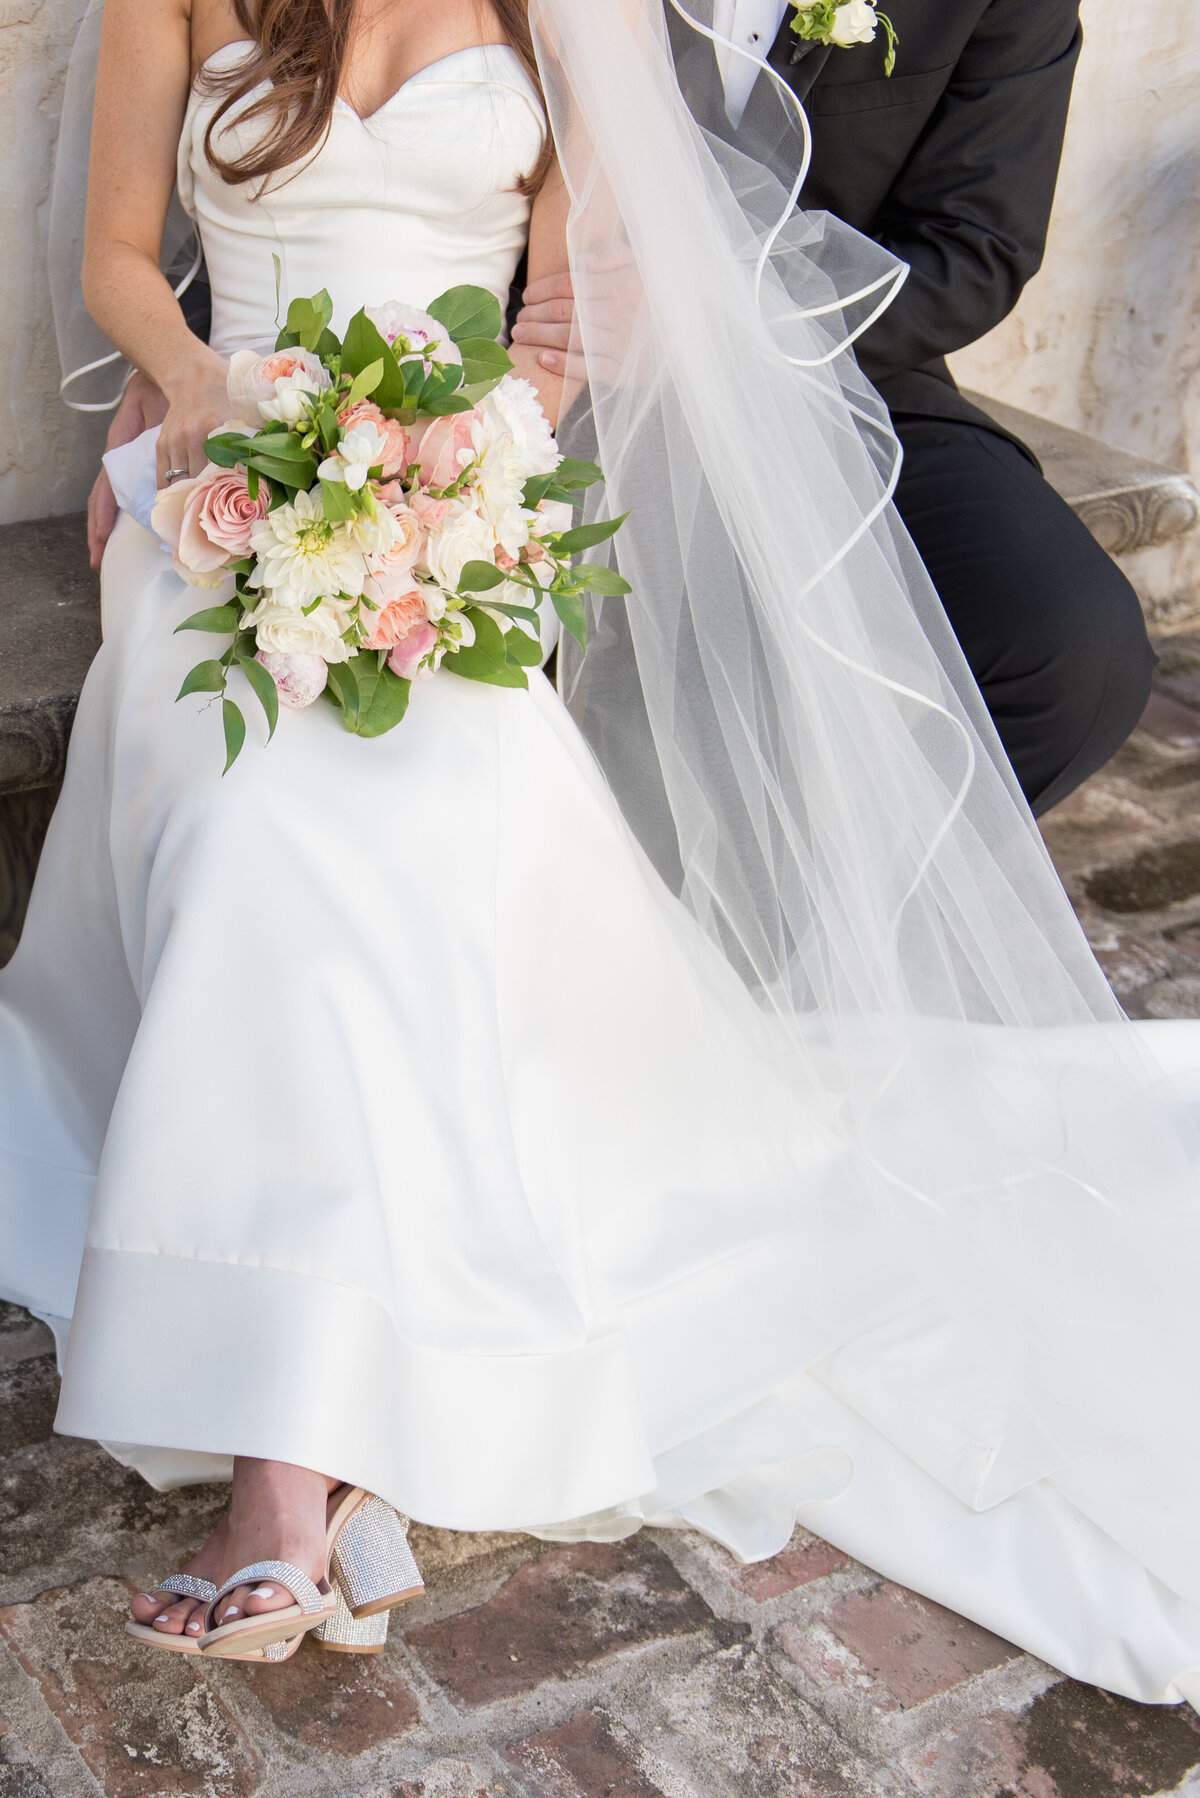 195_Alianne & Dylan's Wedding_BrdGrm_Lindsay Ott Photography